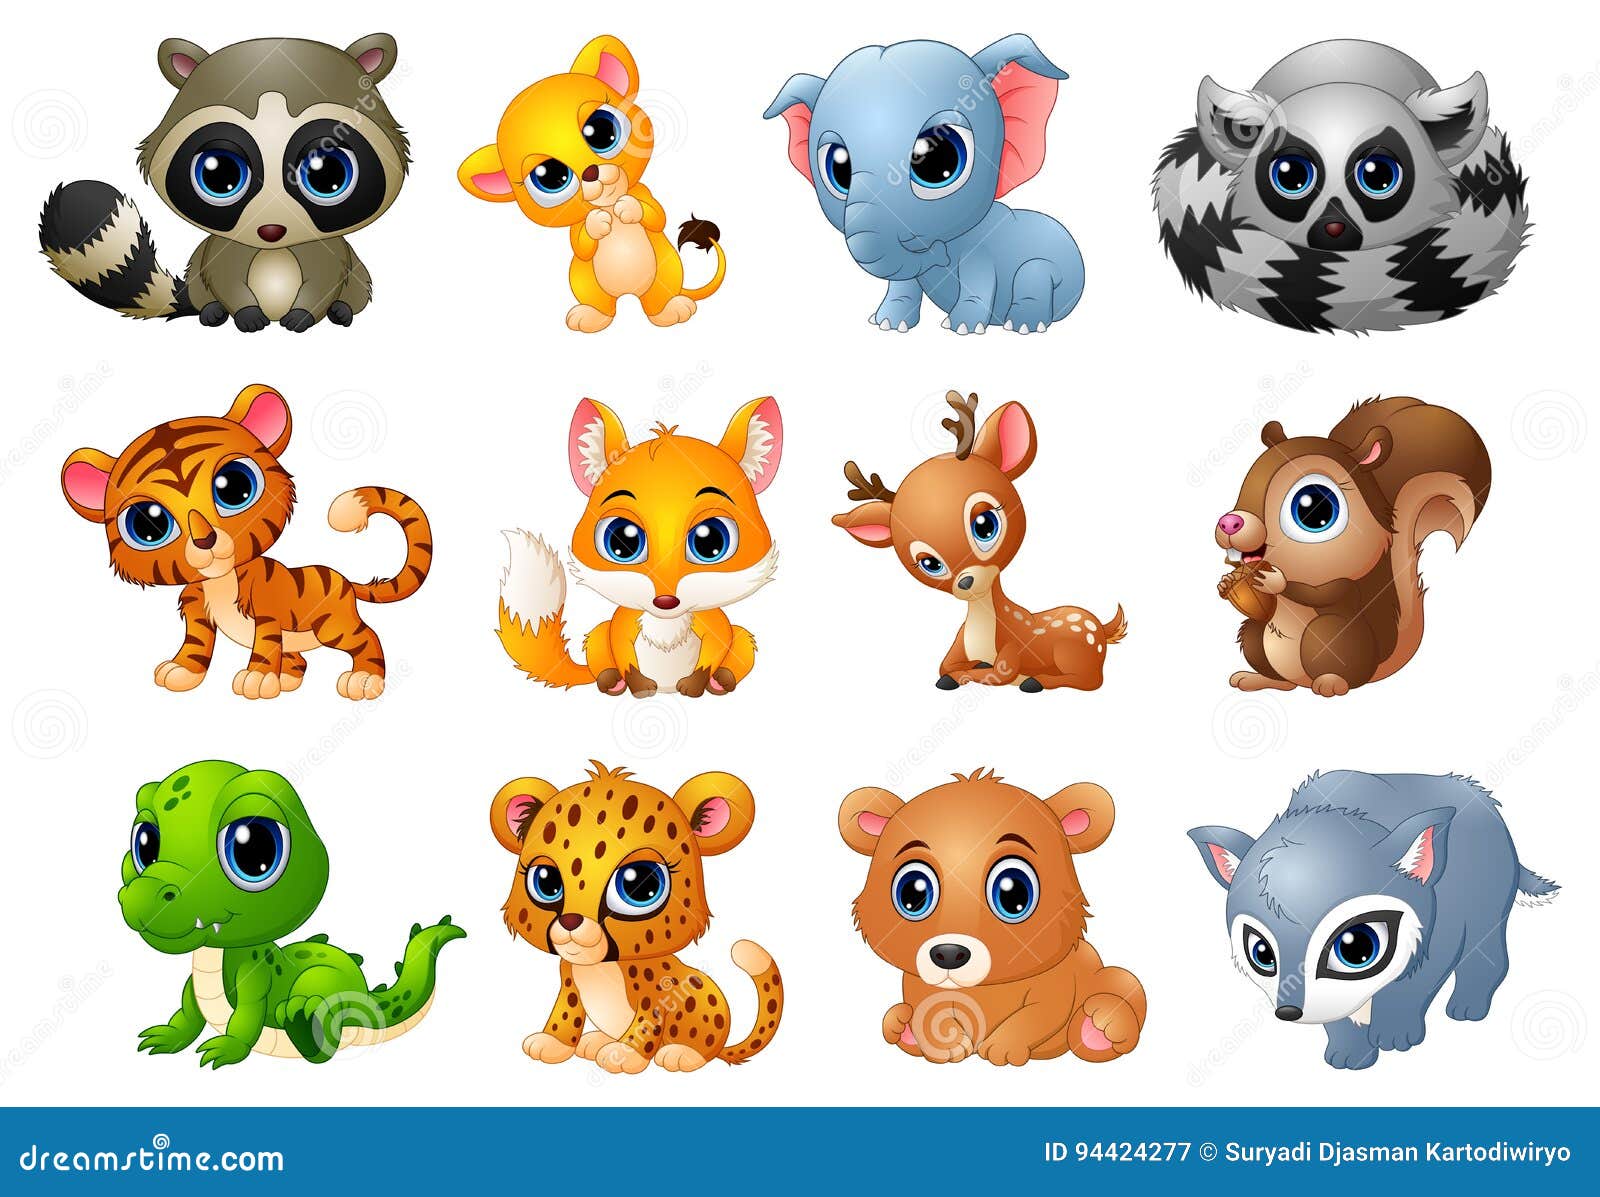 Cute Animals cartoon set stock vector. Illustration of cheetah - 94424277